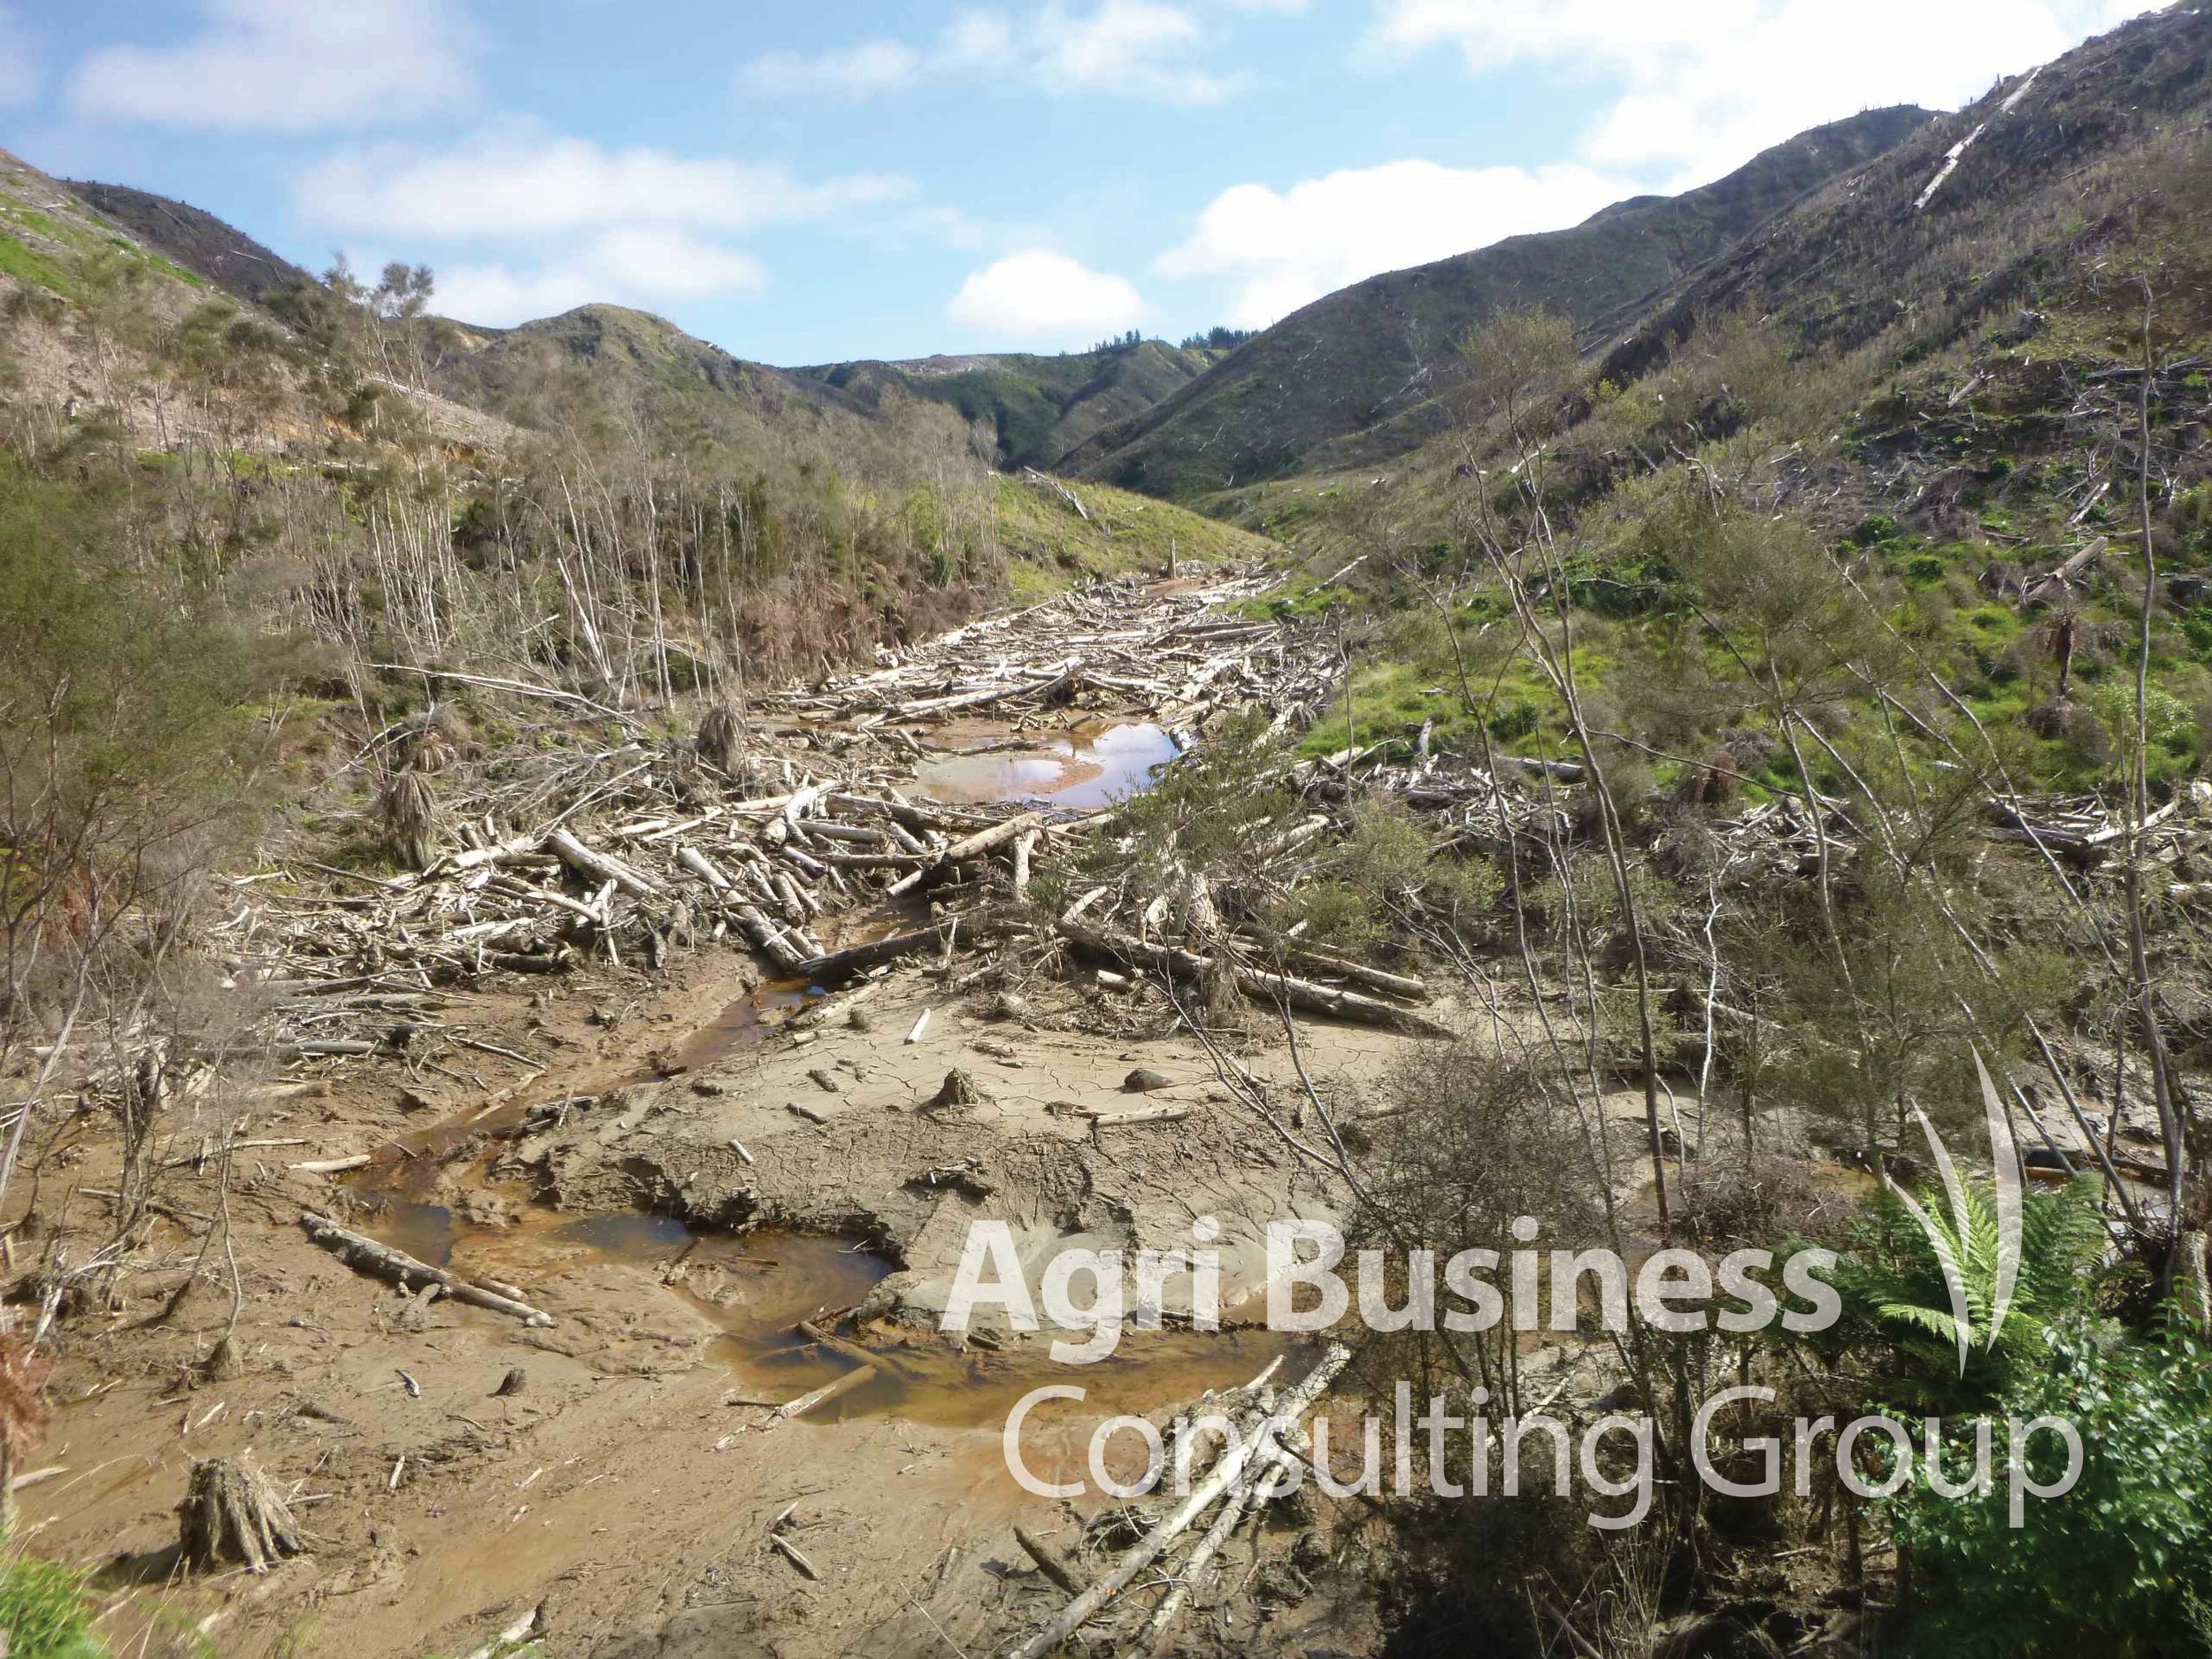  Wind storm and land slip damage on a forest plantation, New Zealand. 